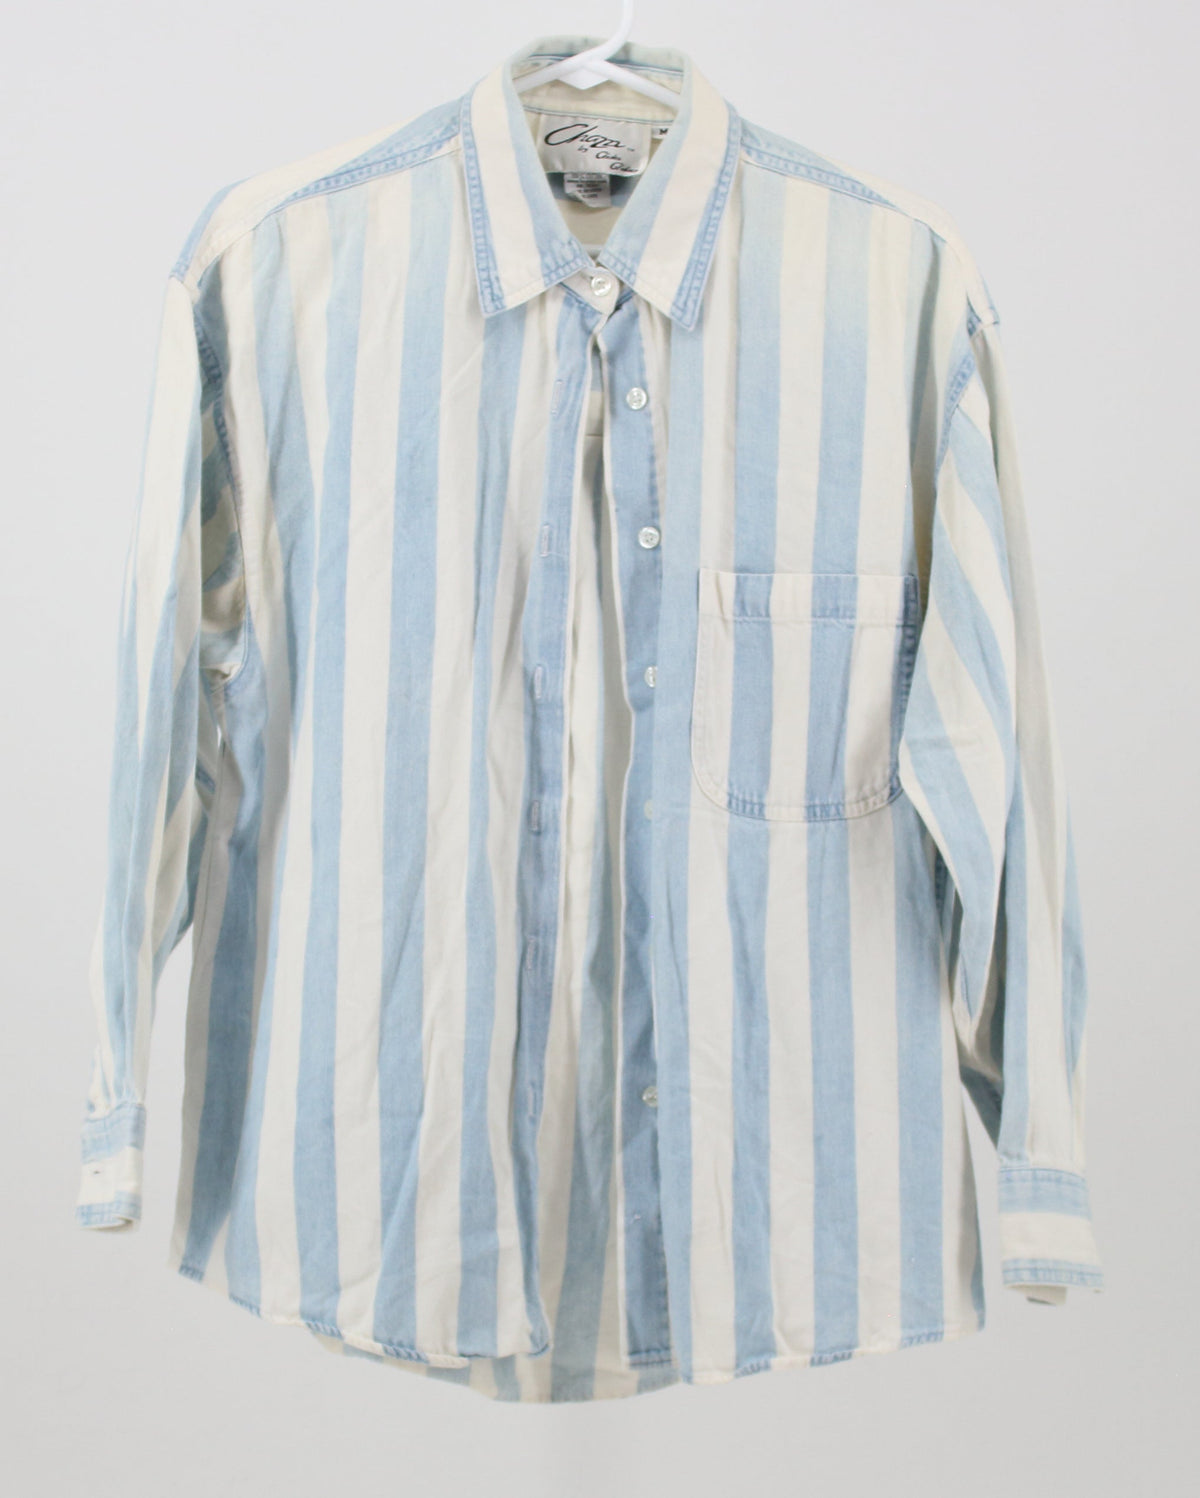 Chazz Blue and White Stripe 100% Cotton Shirt